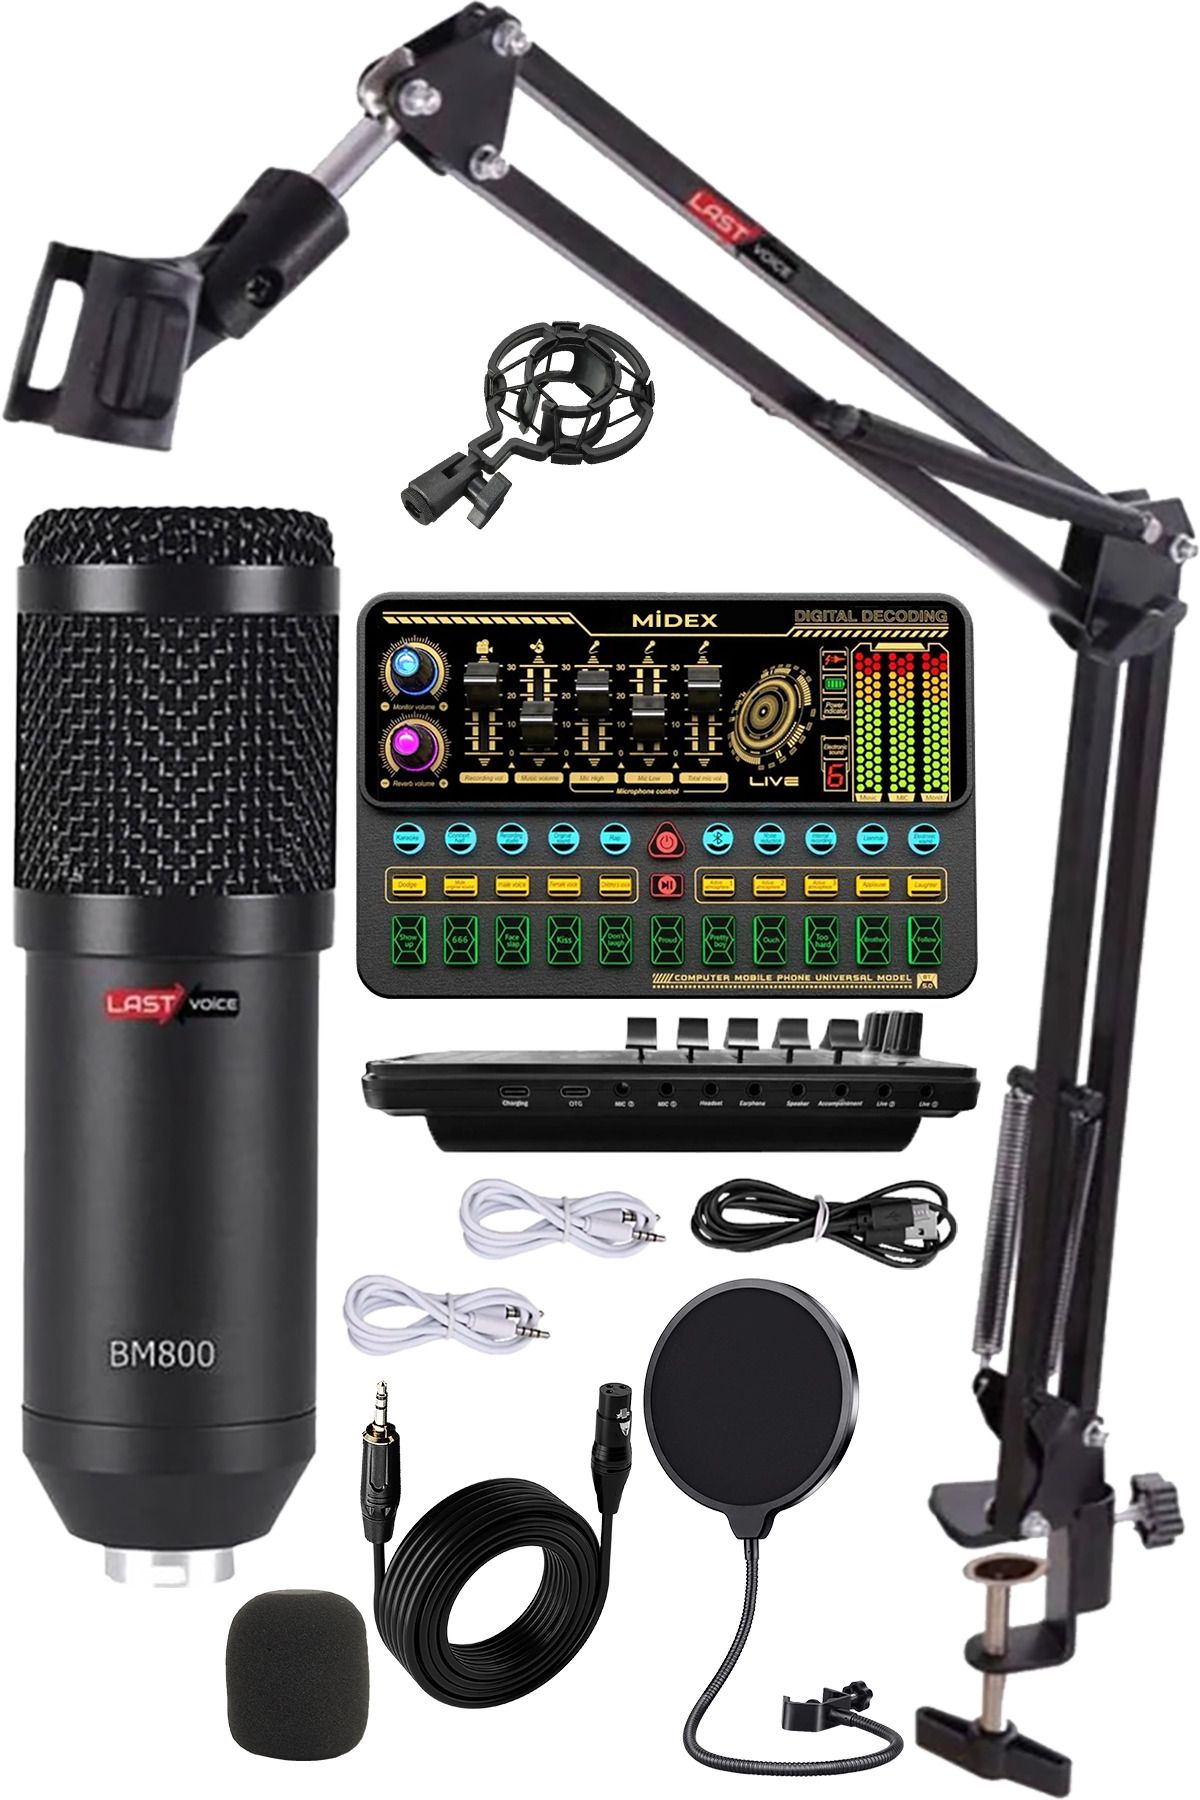 Lastvoice Bm800 Live Platinium Set Efektli Ses Kartı Mikrofon Stand Kayıt Canlı Yayın Seti